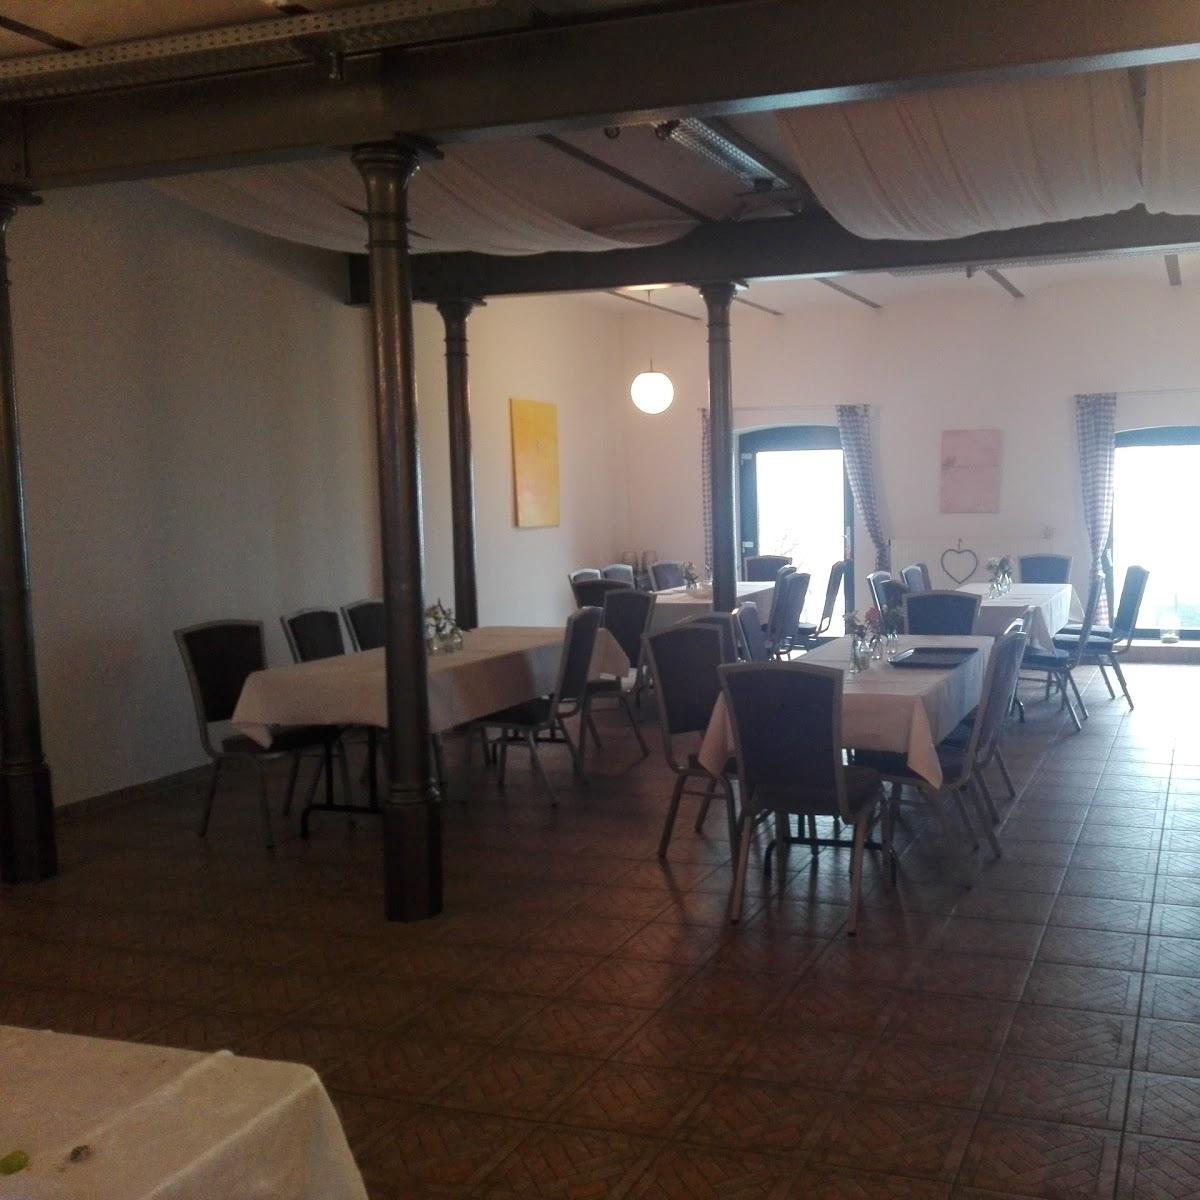 Restaurant "Café in der GutsHofScheune" in Bad Oldesloe